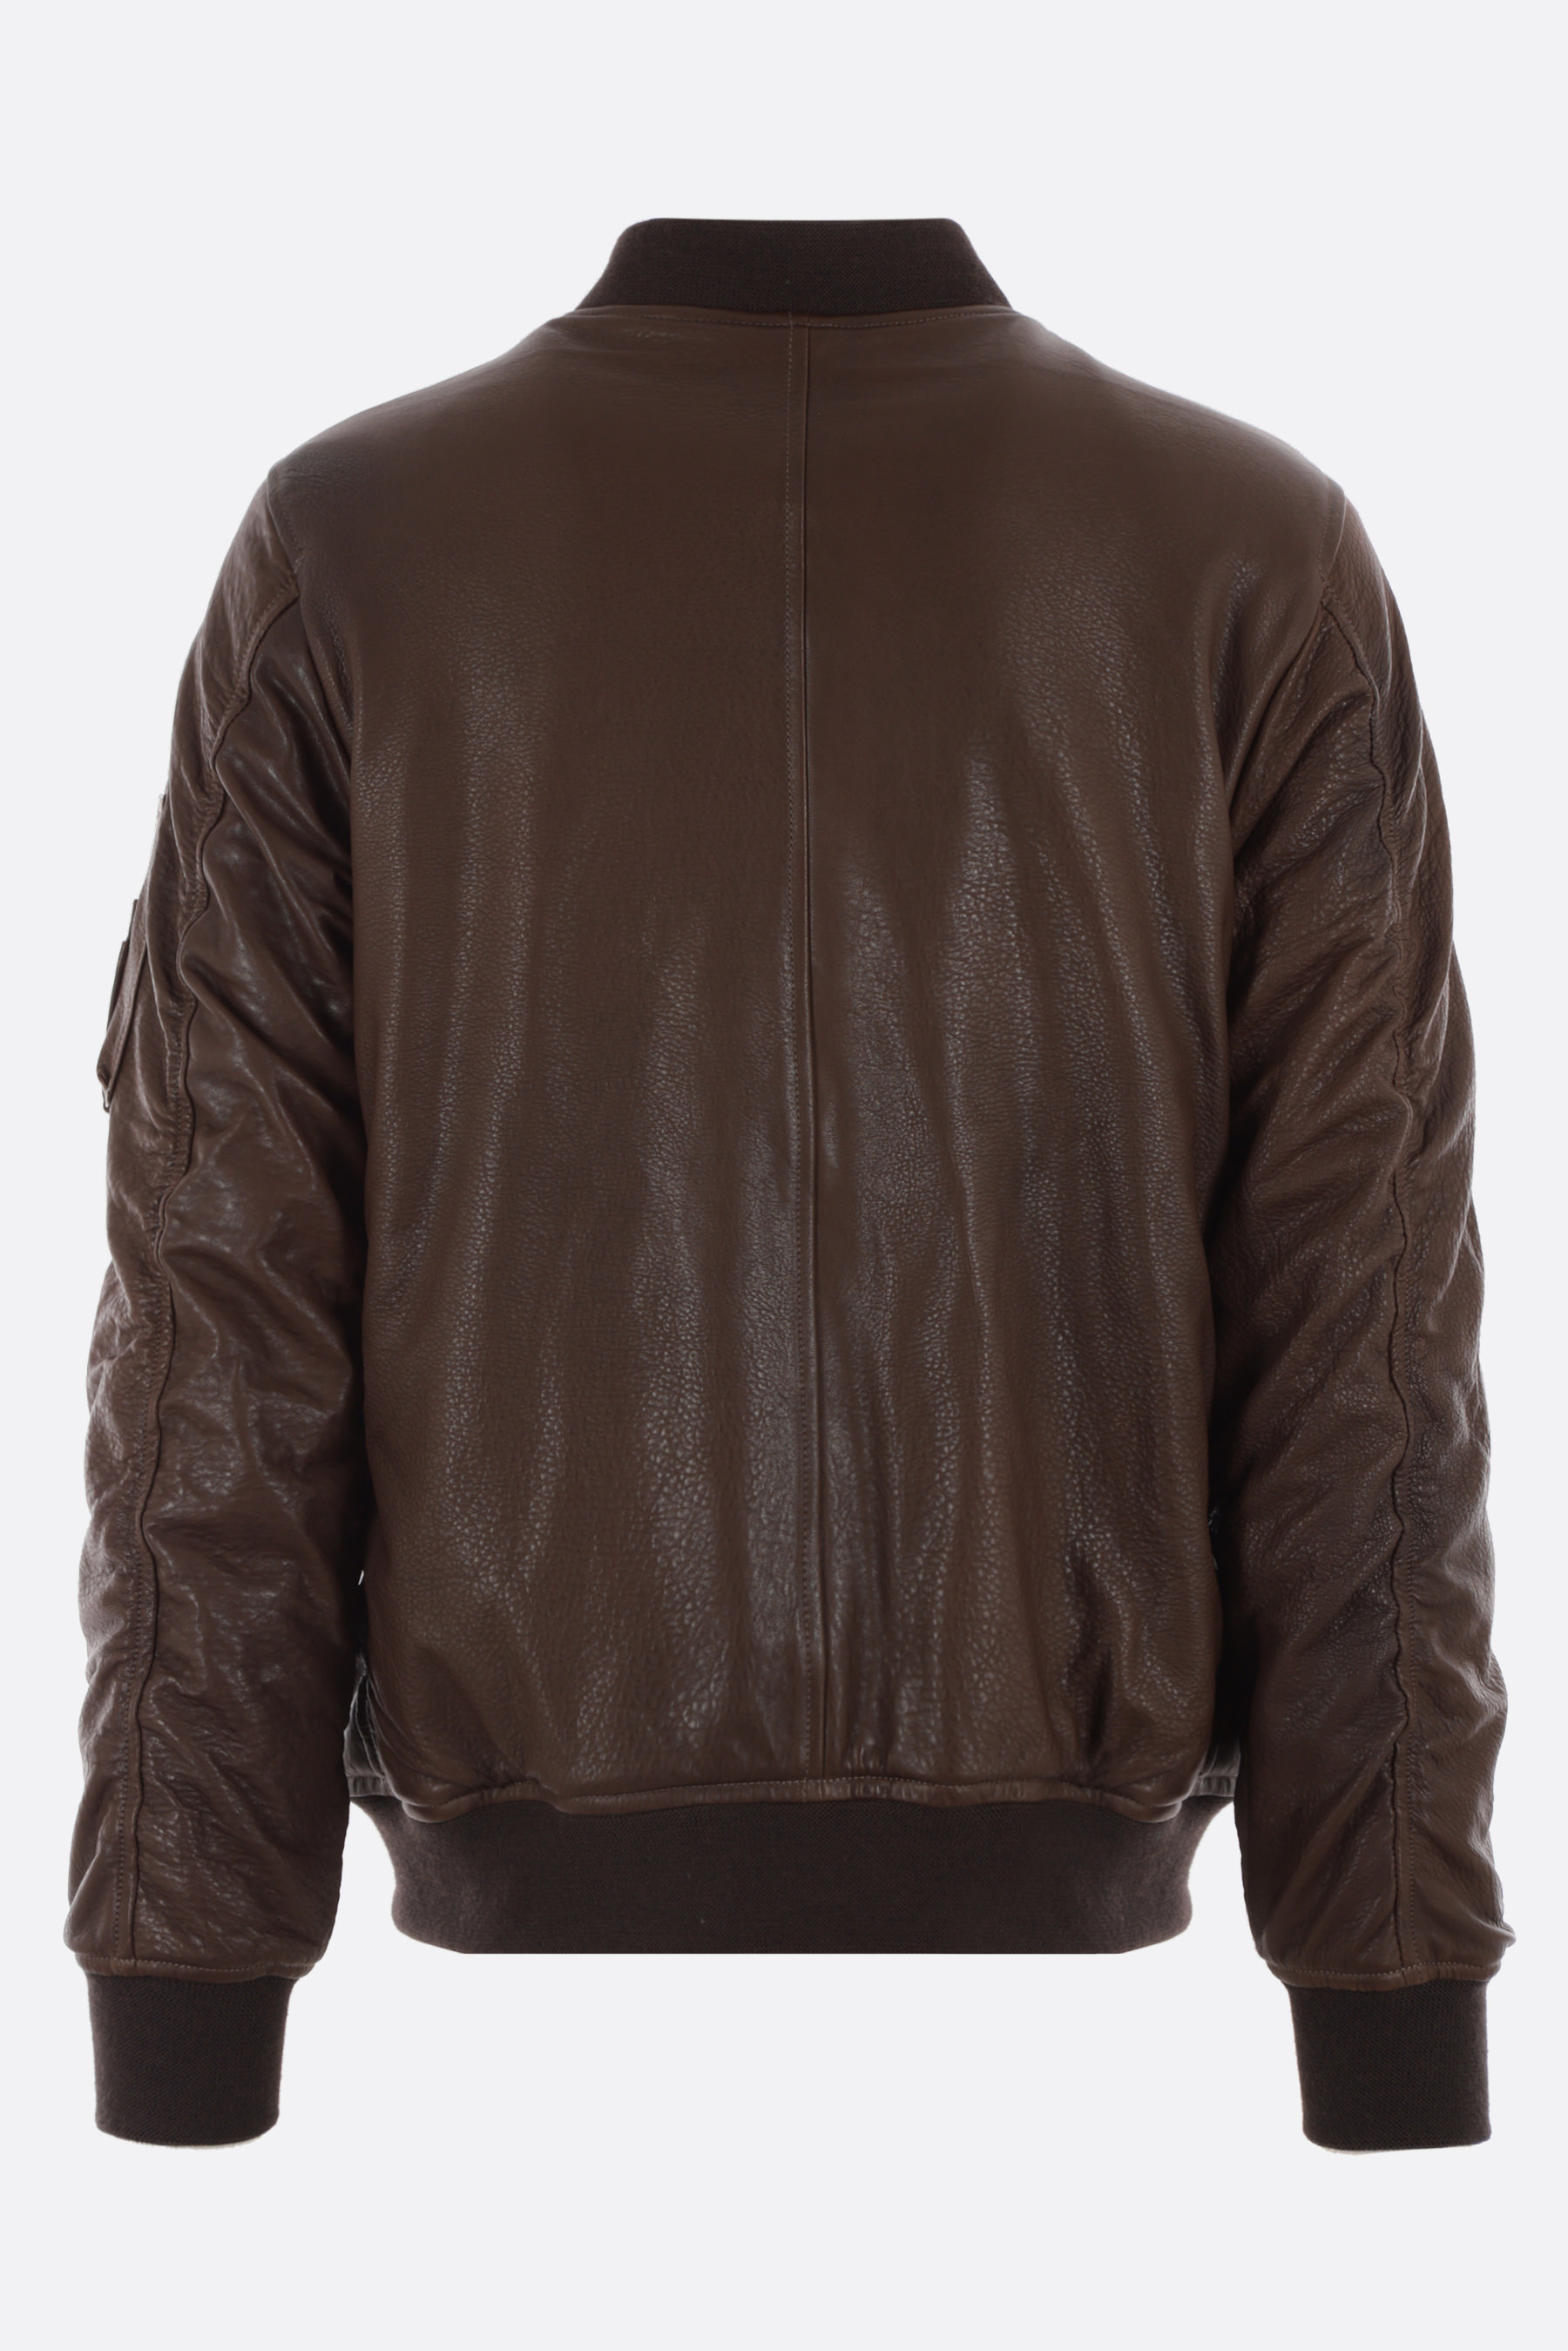 GIORGIO BRATO leather bomber jacket - Brown - GU24F14095MGAMUDBROWN ...